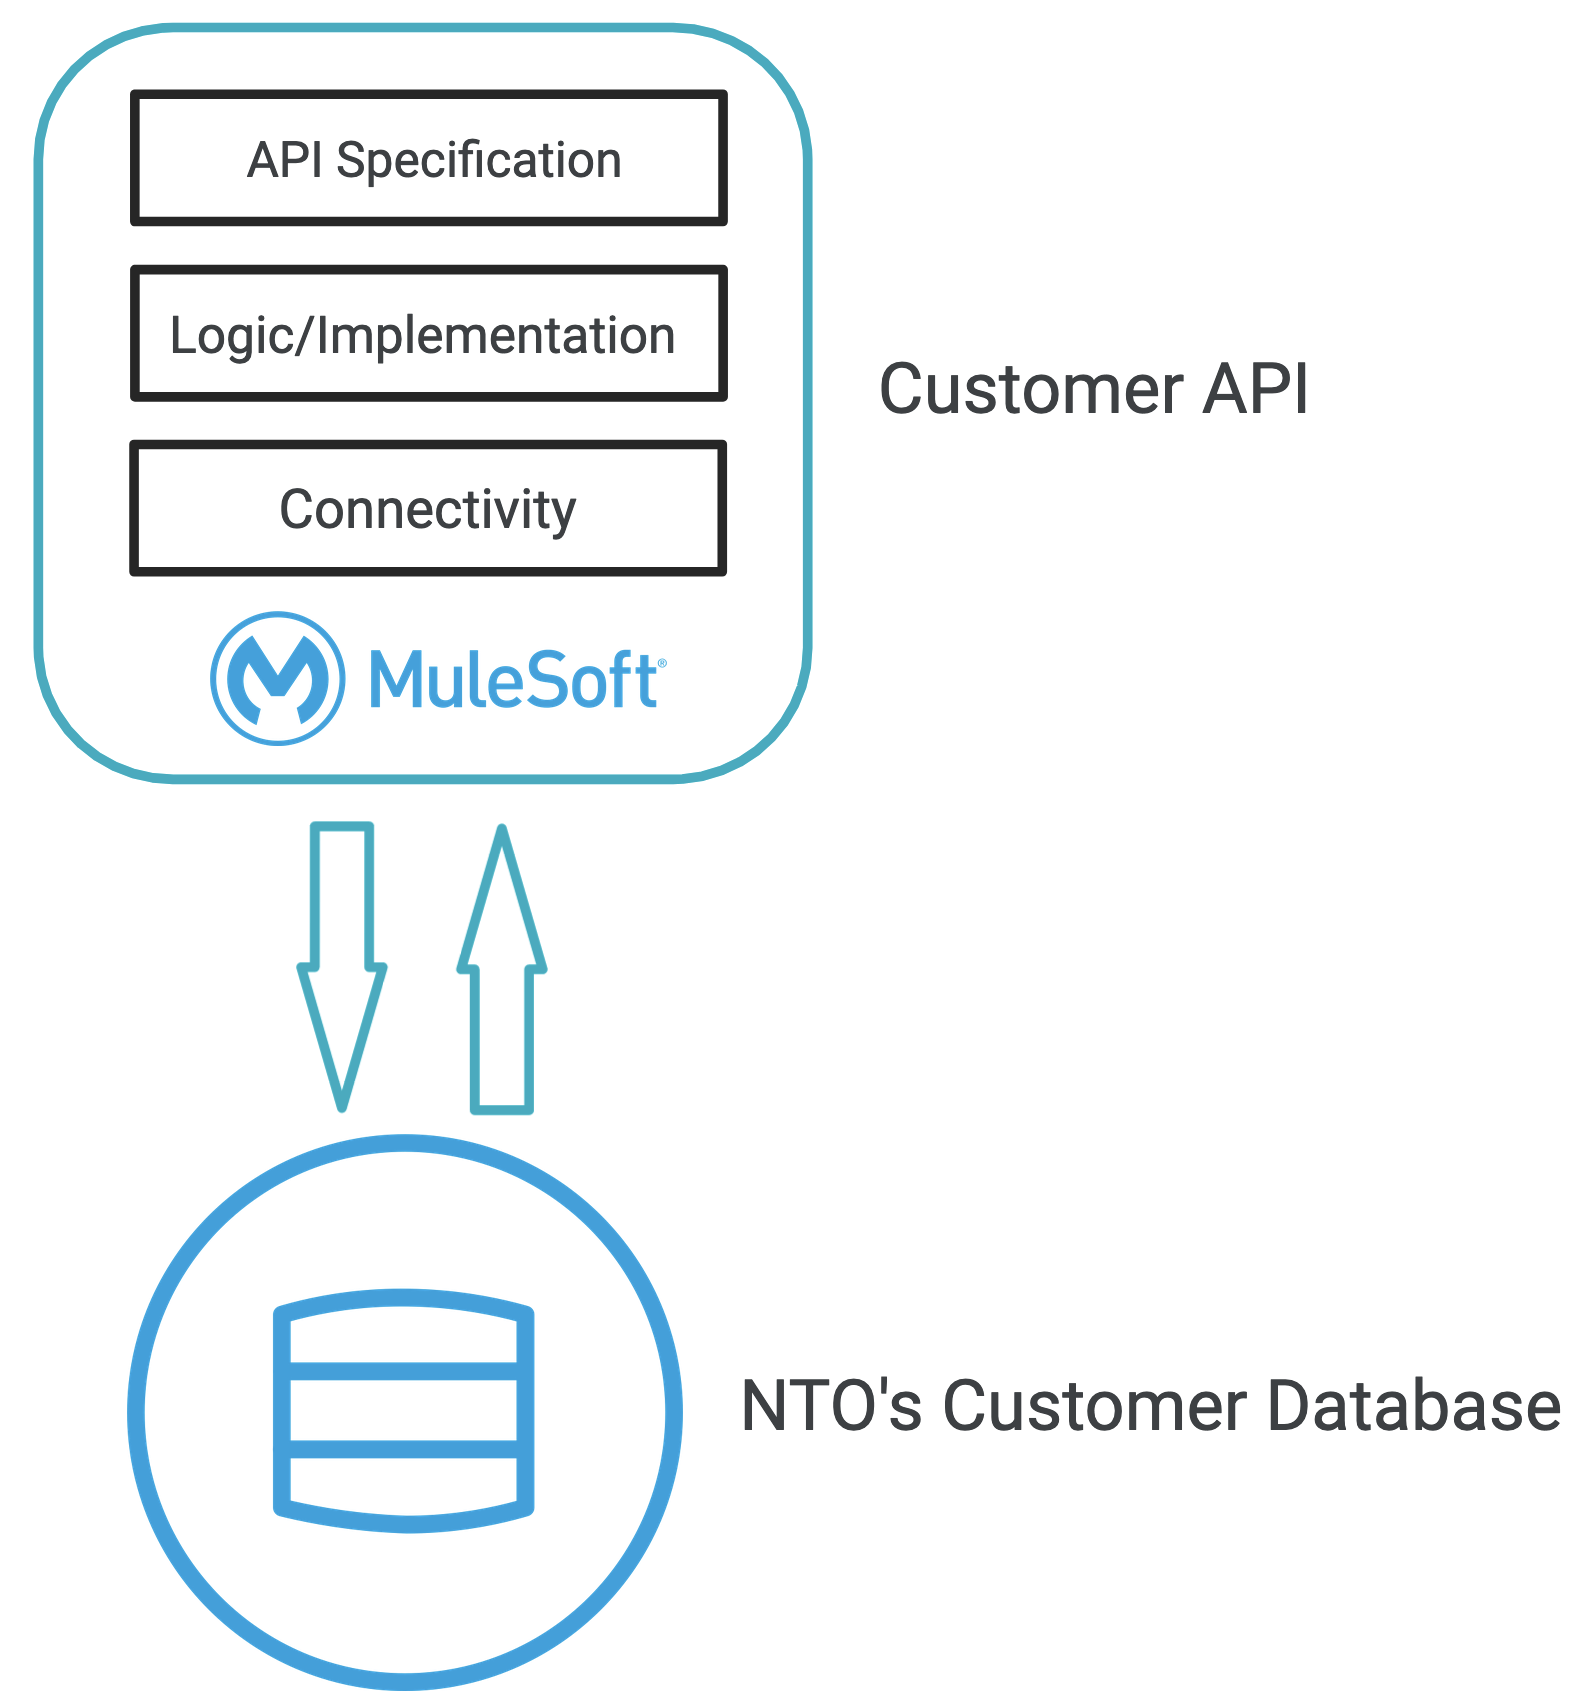 Customer API and NTO's Customer Database diagram